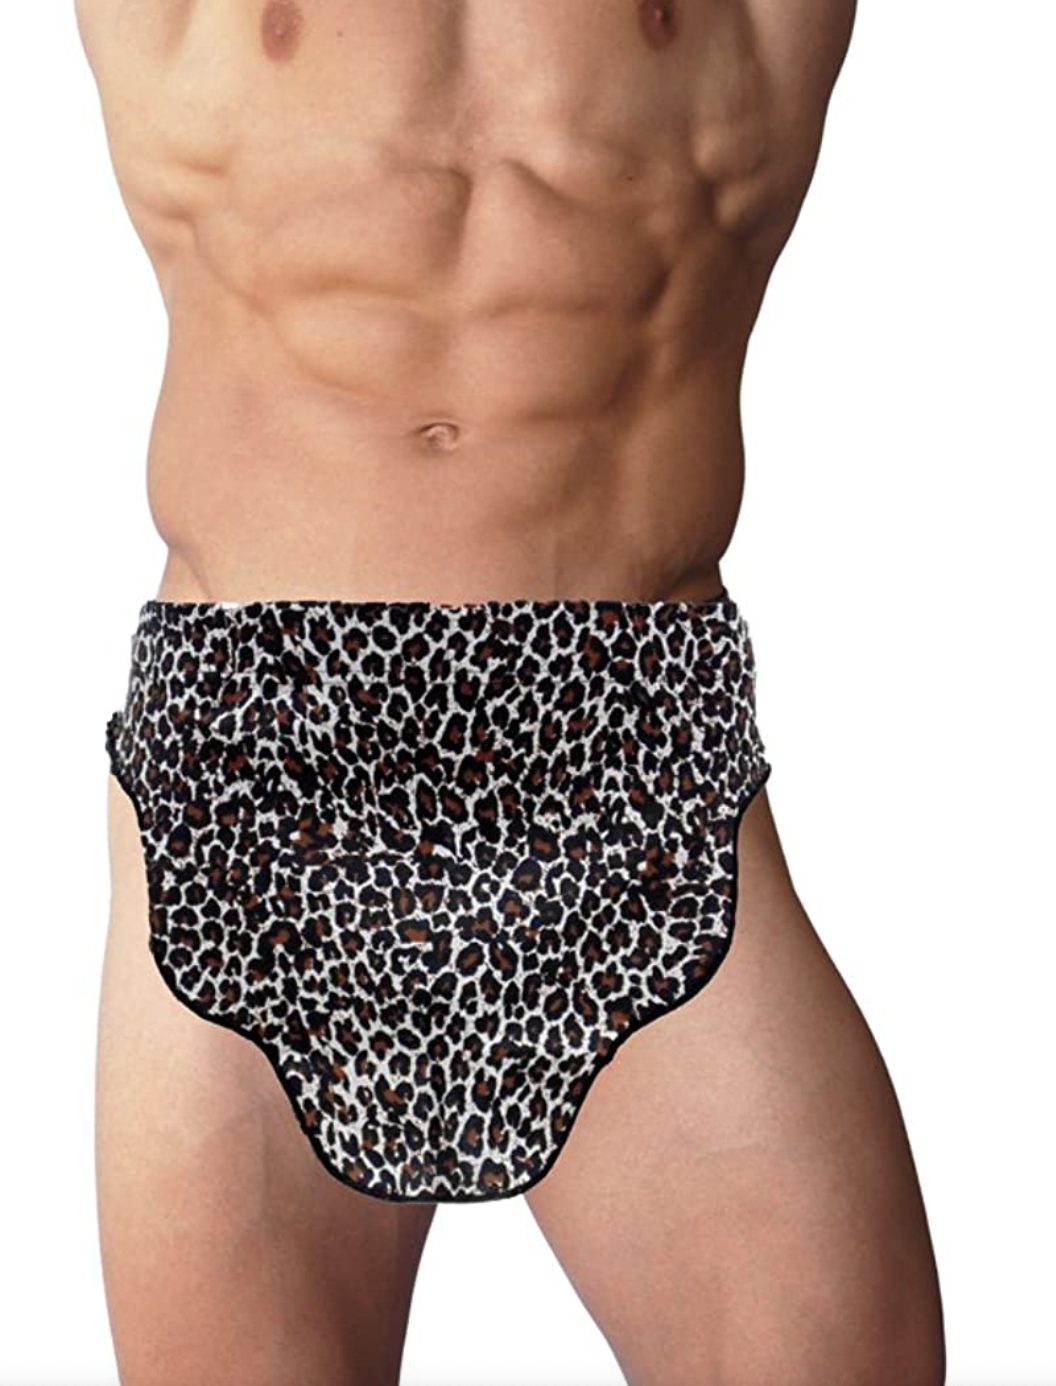 A piece of leopard print cloth covering a man&#x27;s crotch